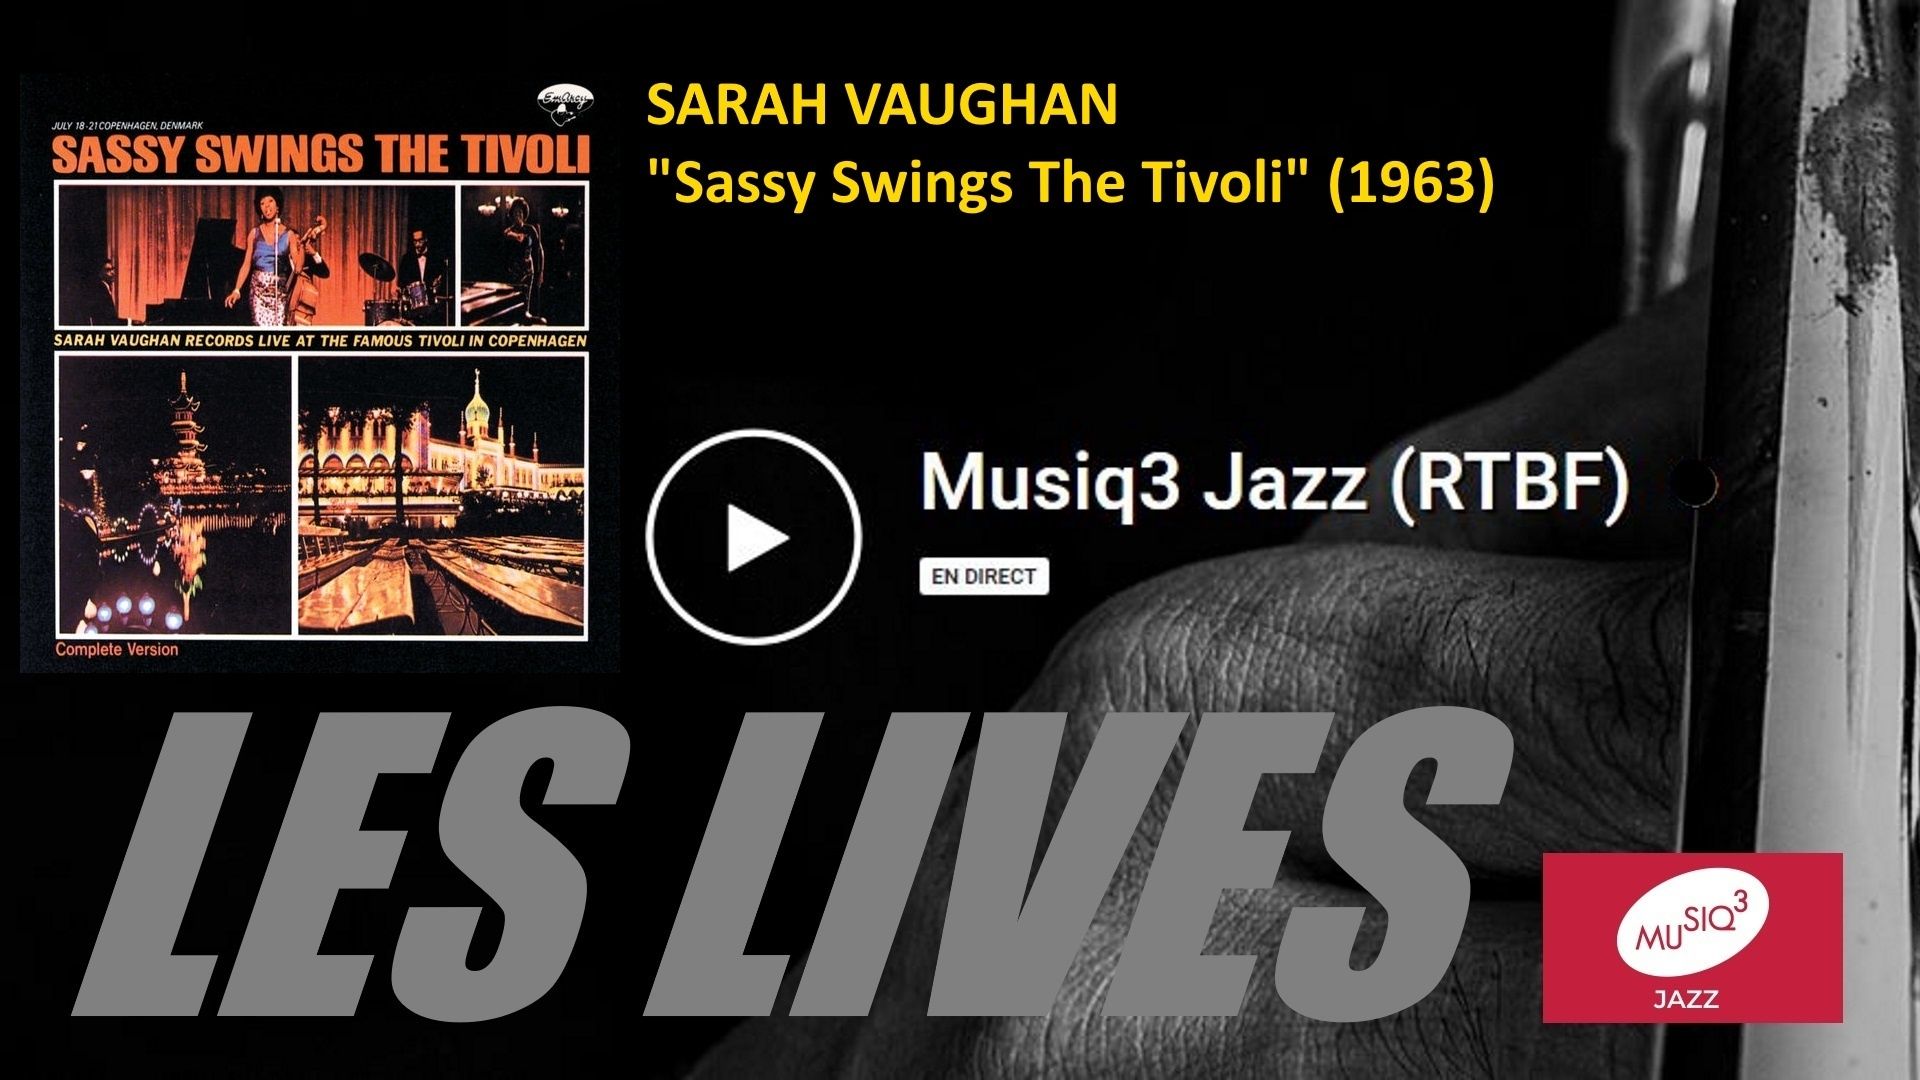 Les lives de Musiq3 Jazz : Sarah Vaughan "Sassy Swings The Tivoli"